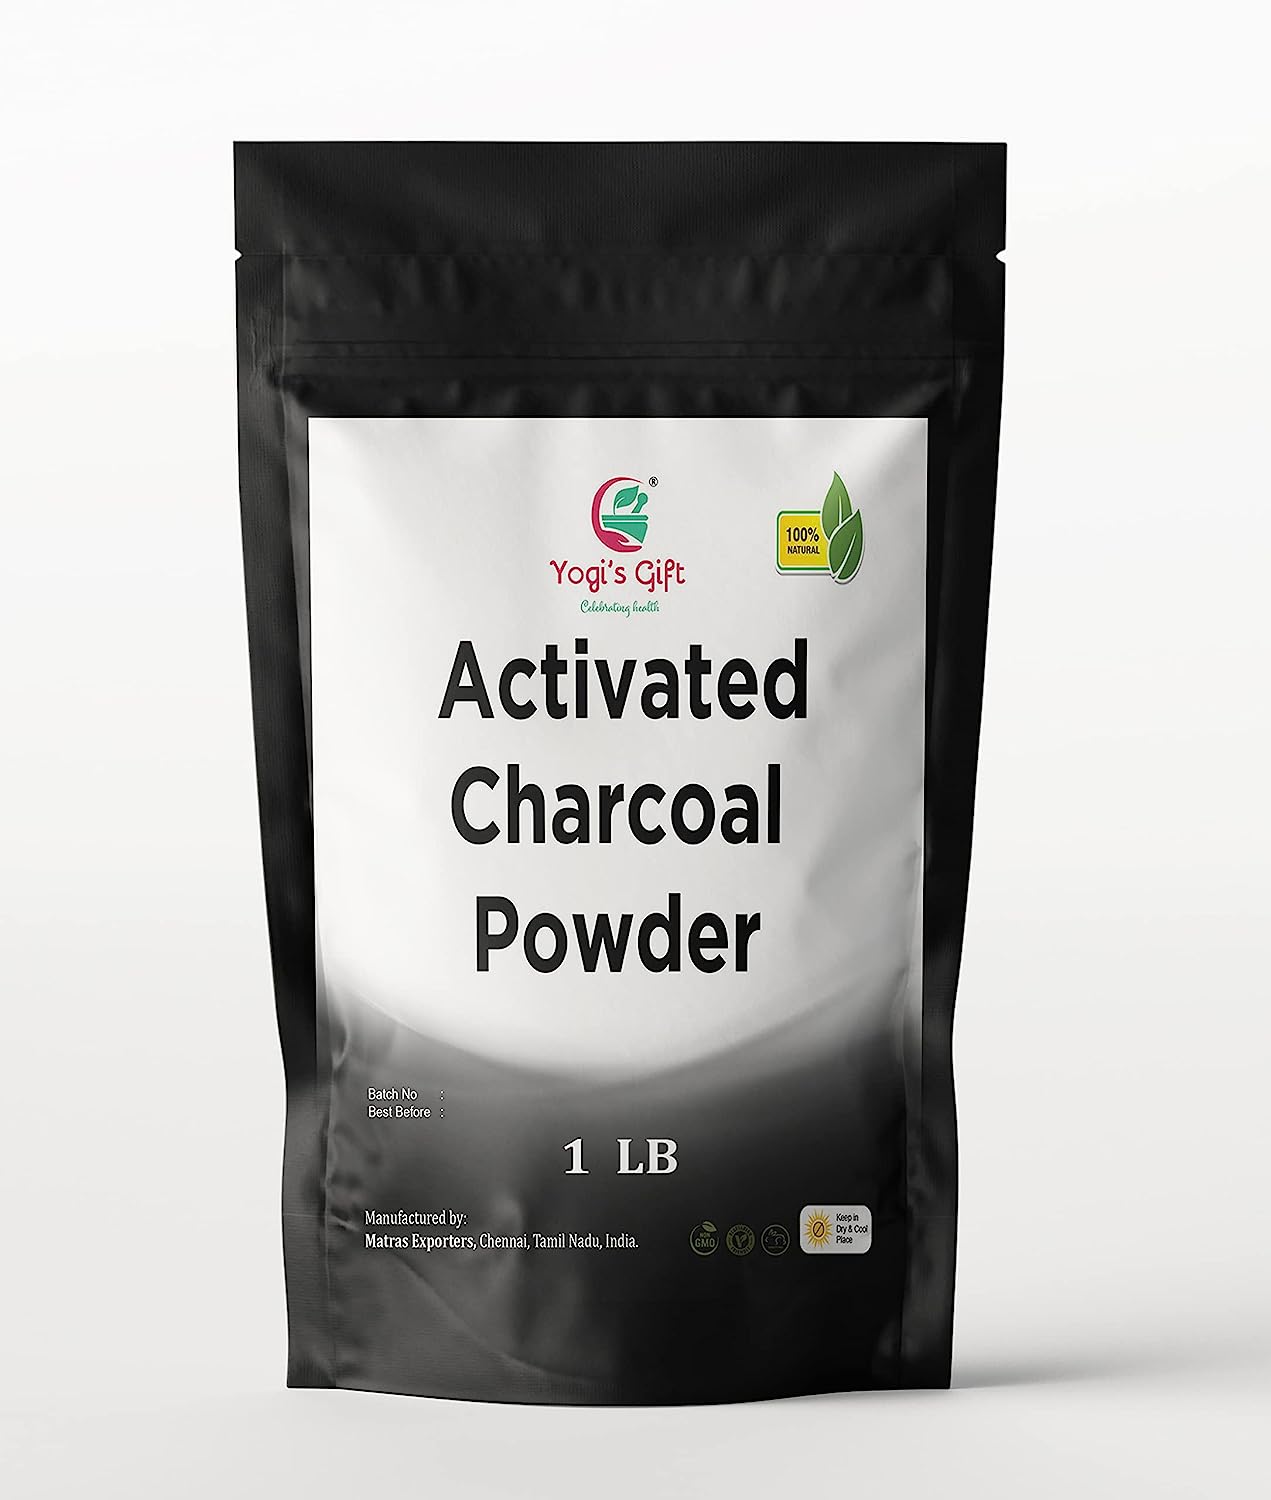 Activated Charcoal Powder Food Grade 1 LB | Grounded Activated Charcoal Powder for Drinks ,Smoothies, Teeth, Skin & Soap Making | 100% Natural Detoxifier | Coconut Shells Based | Yogi's Gift®